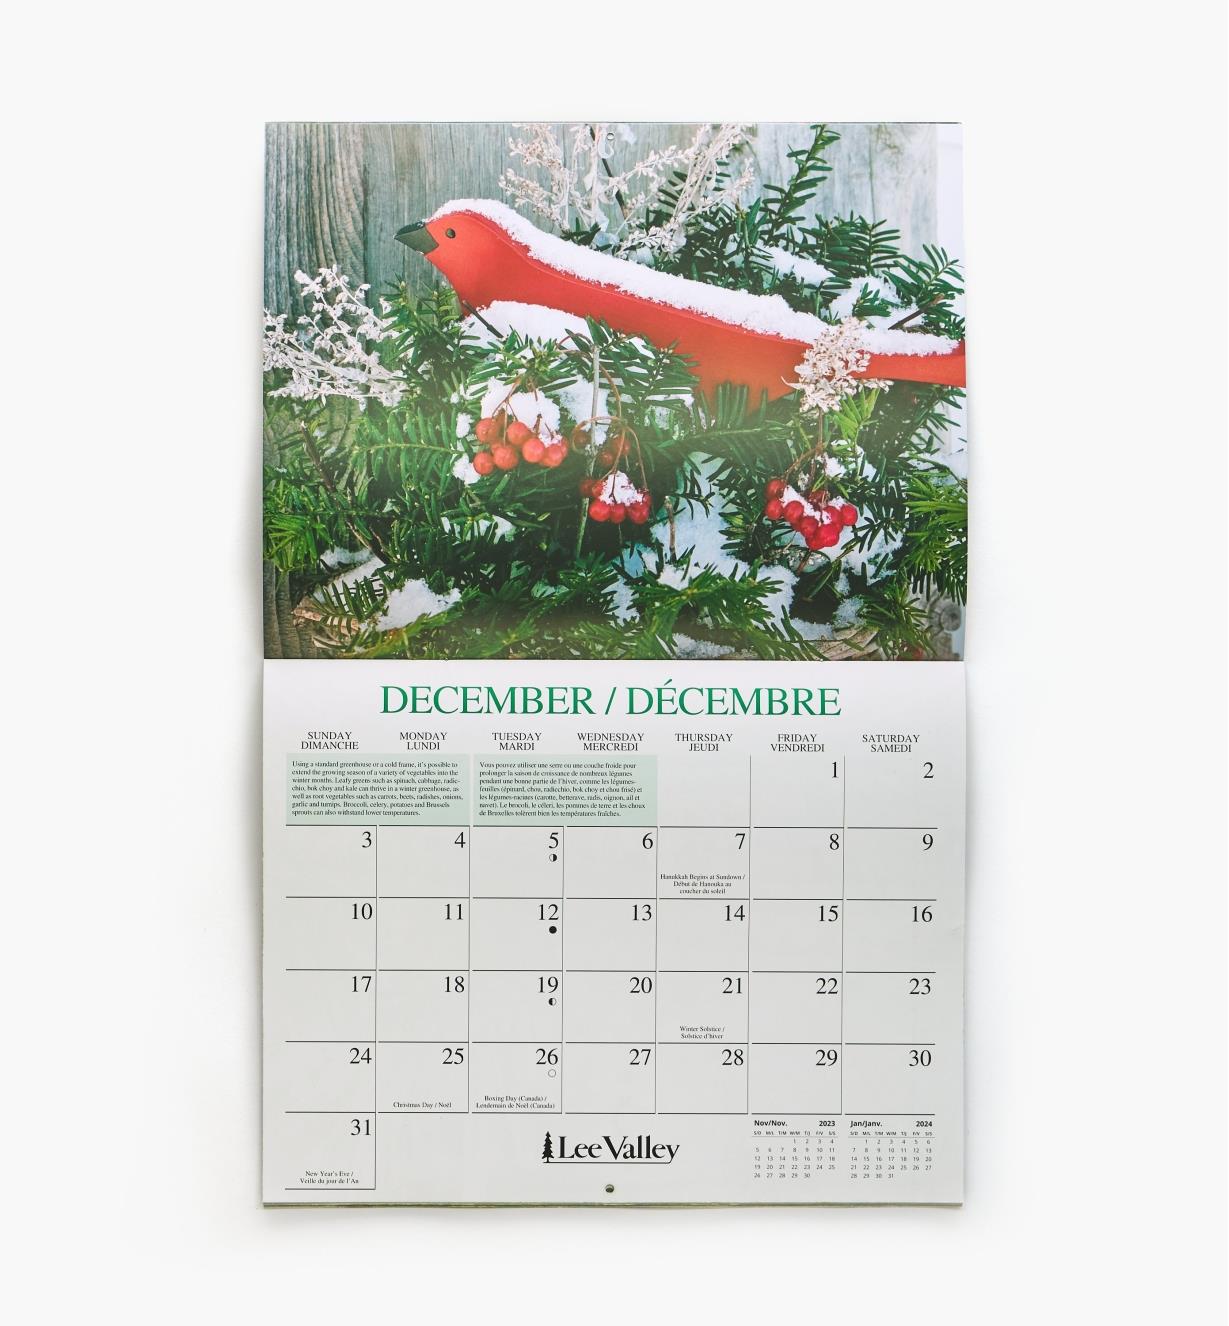 49L0797 - 2023/2024 Gardening Calendar